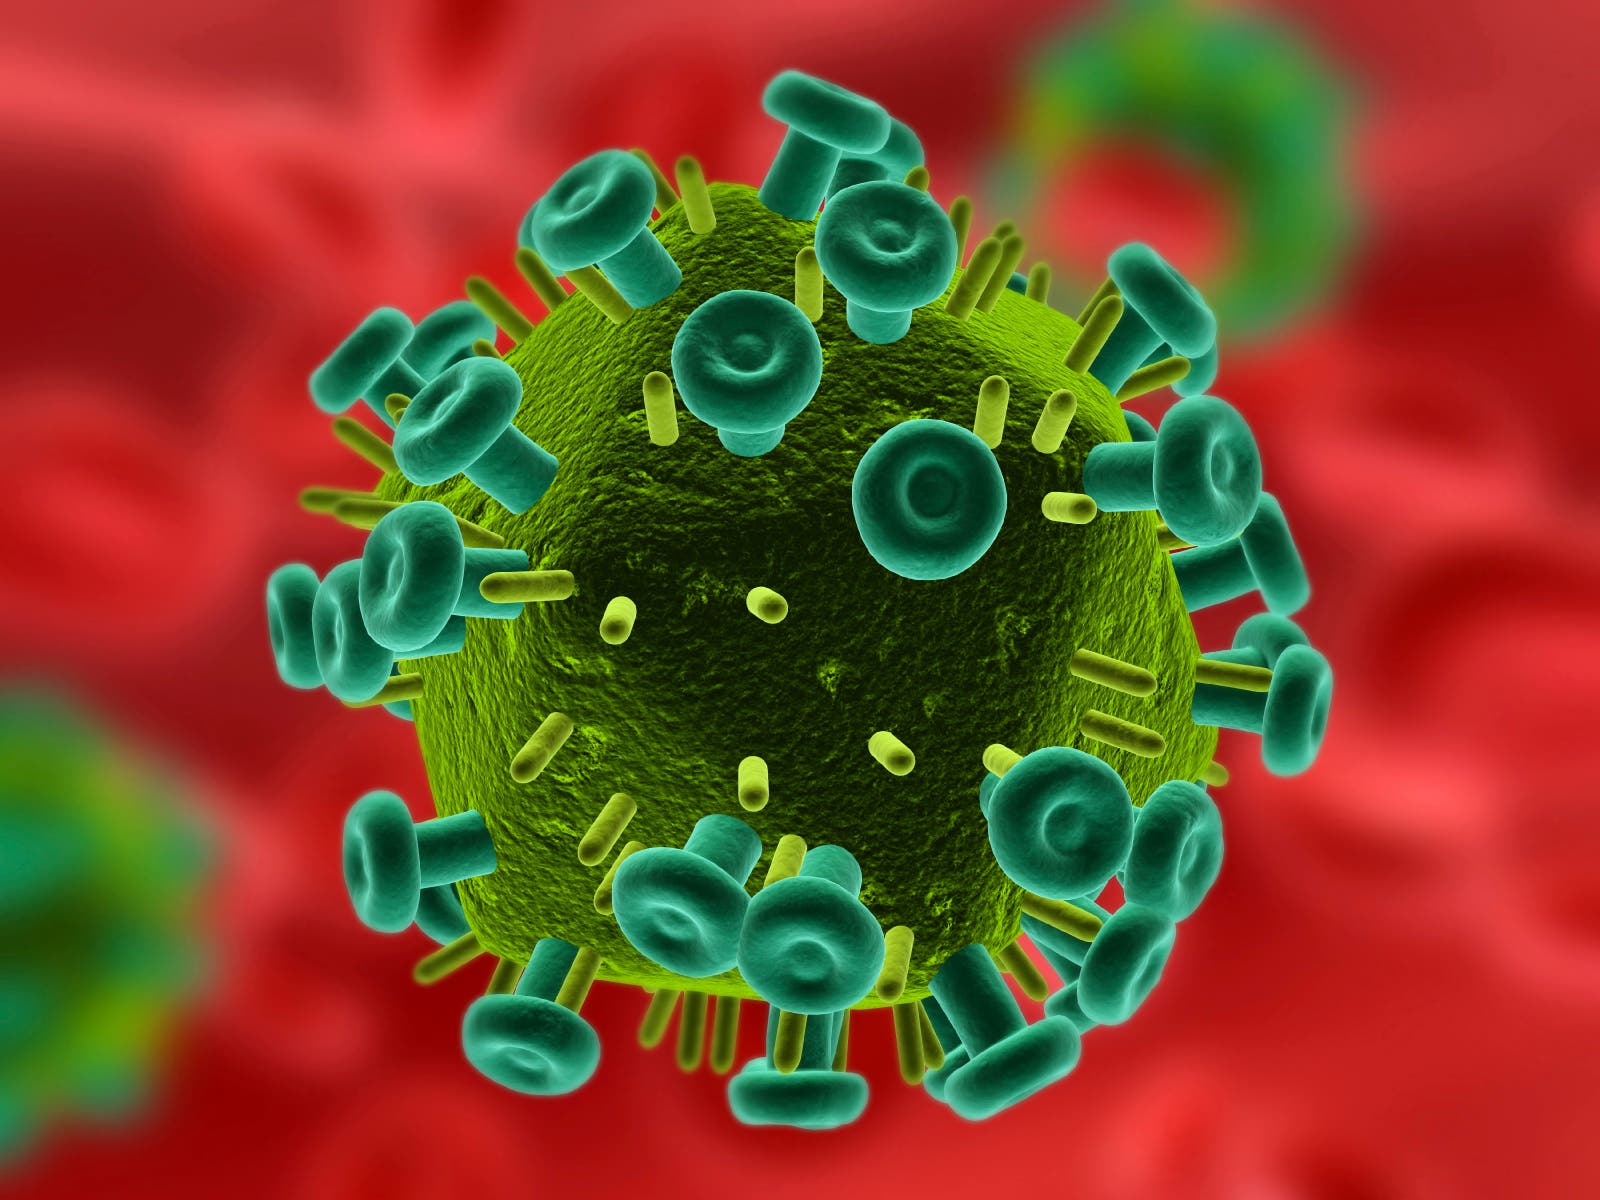 HI-Virus